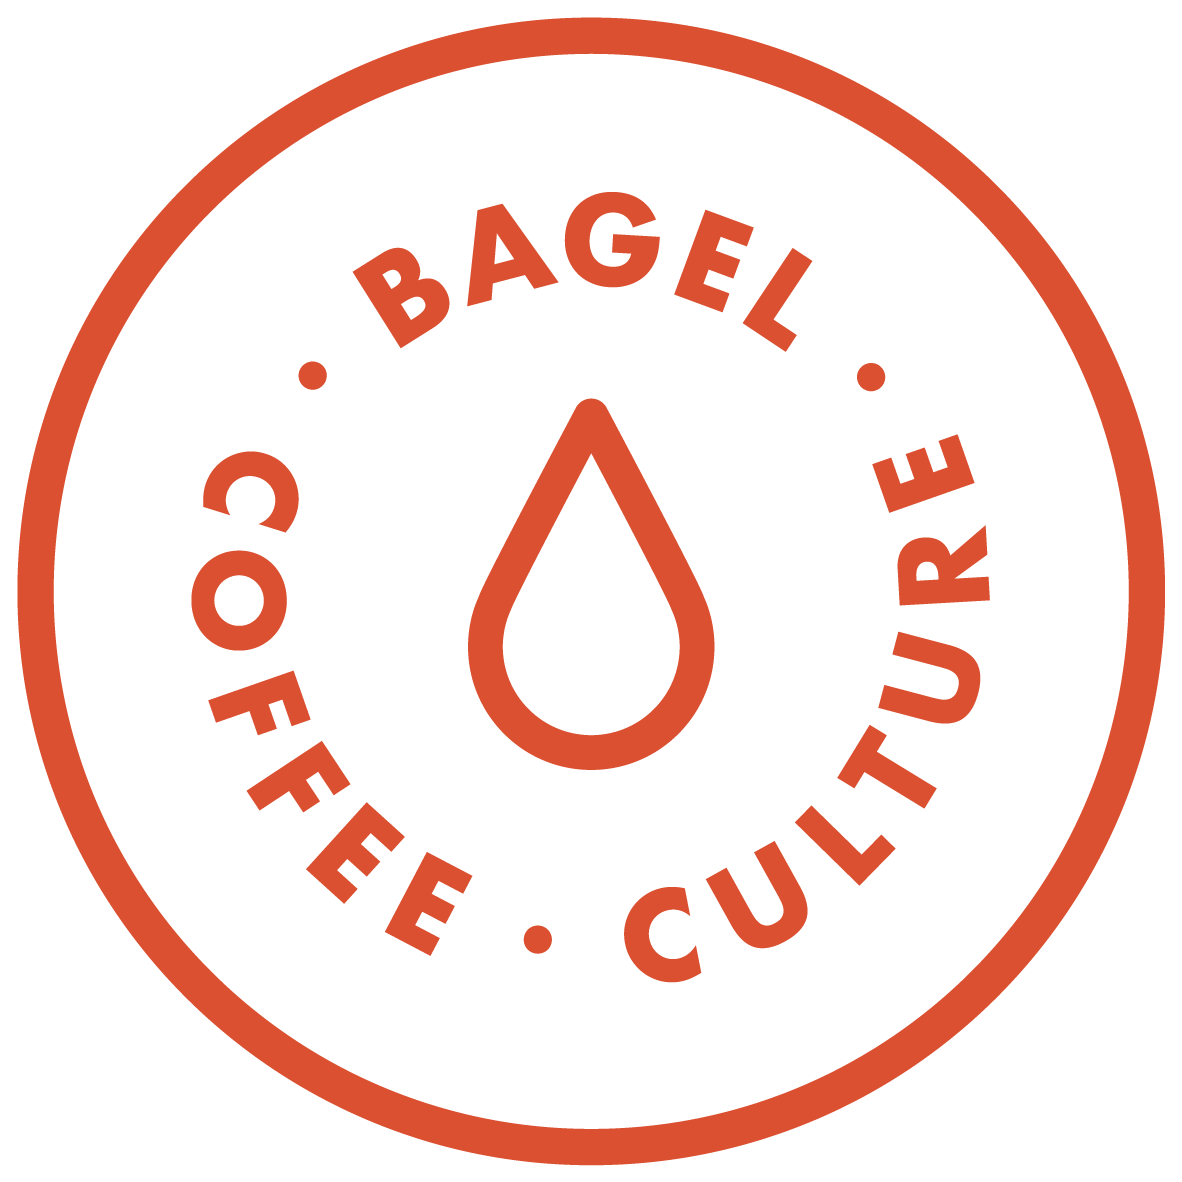 (c) Bagelcoffeeculture.com